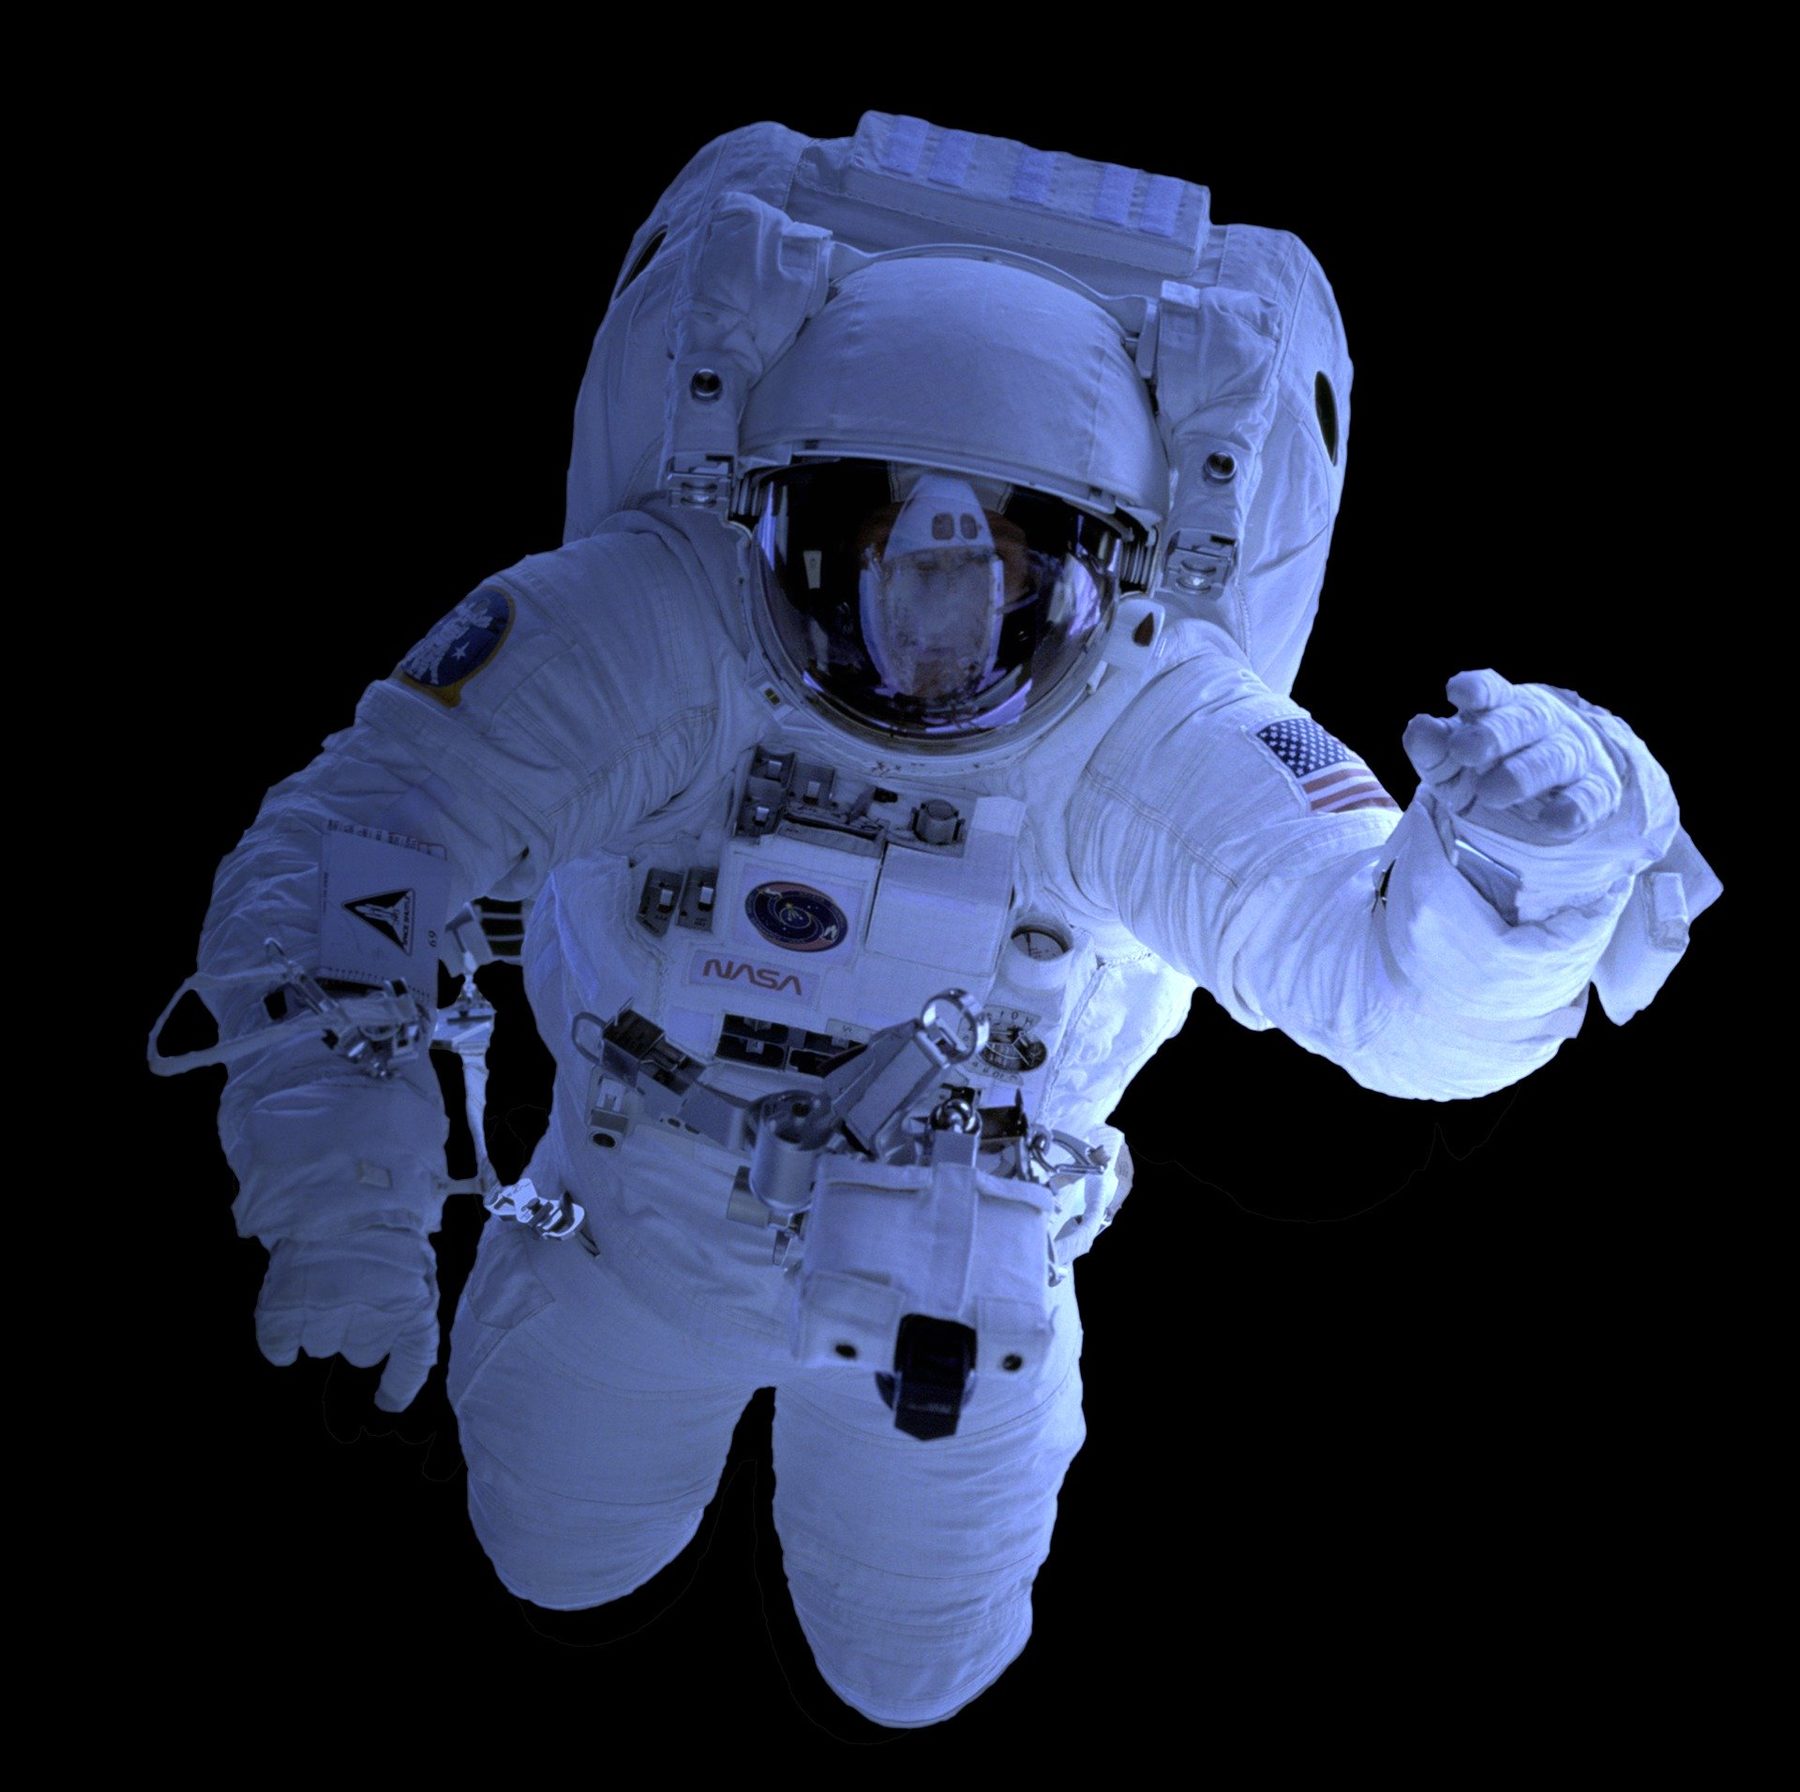 Site Image (Astronaut: NASA, Spacewalk, Spacesuit, Space)